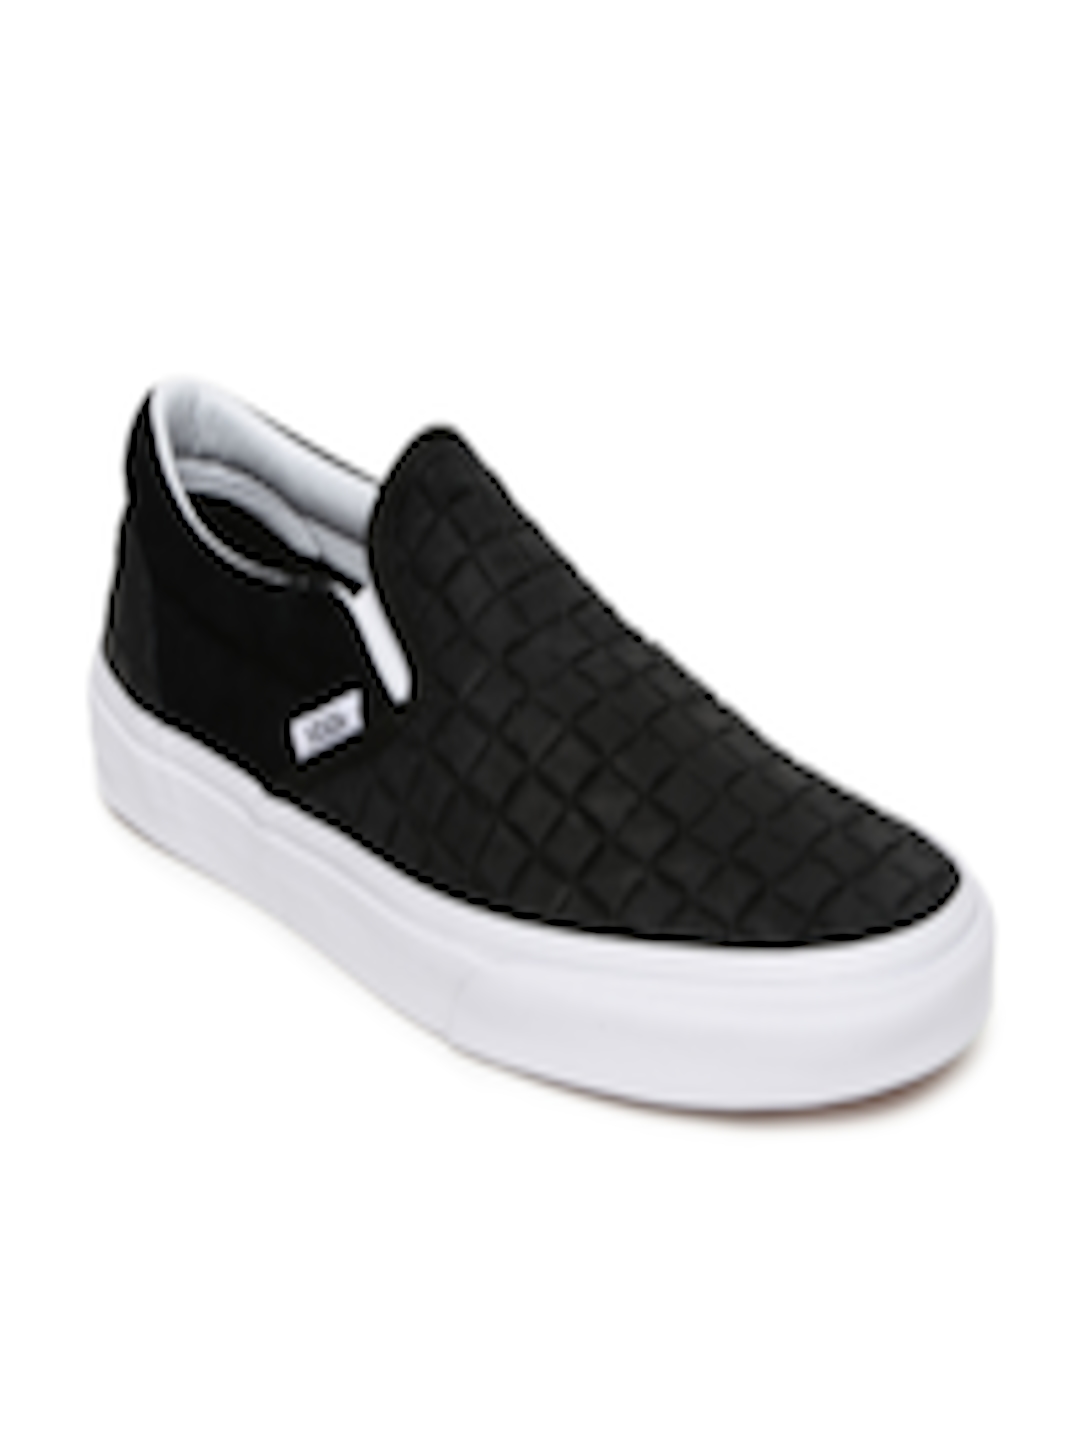 Buy Vans Unisex Black Textured Classic Suede Slip On Sneakers - Casual ...